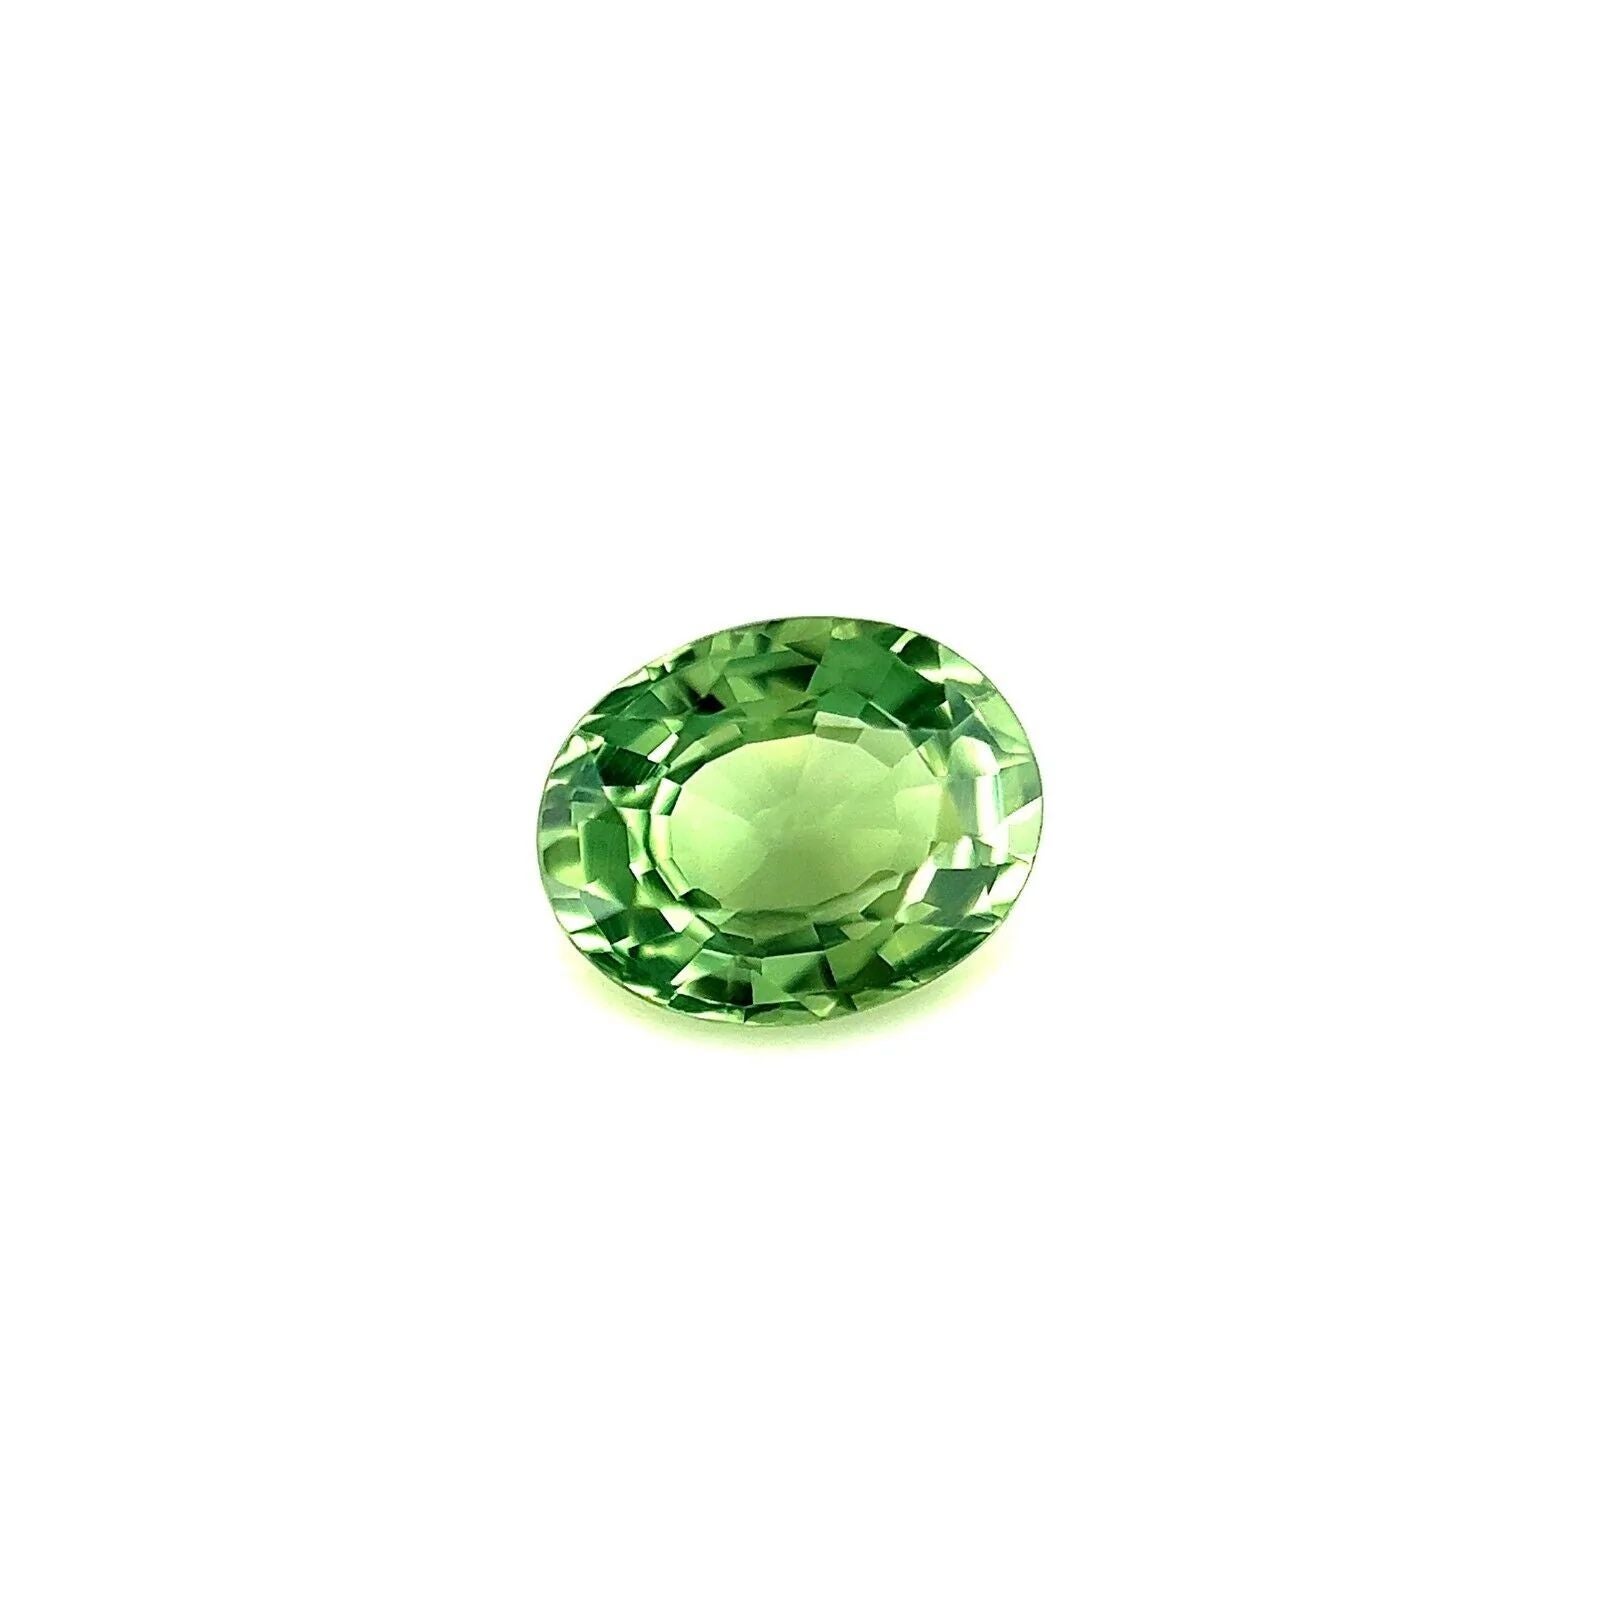 1.02ct Vivid Green Sapphire Natural Oval Cut Loose Cut Gemstone VS